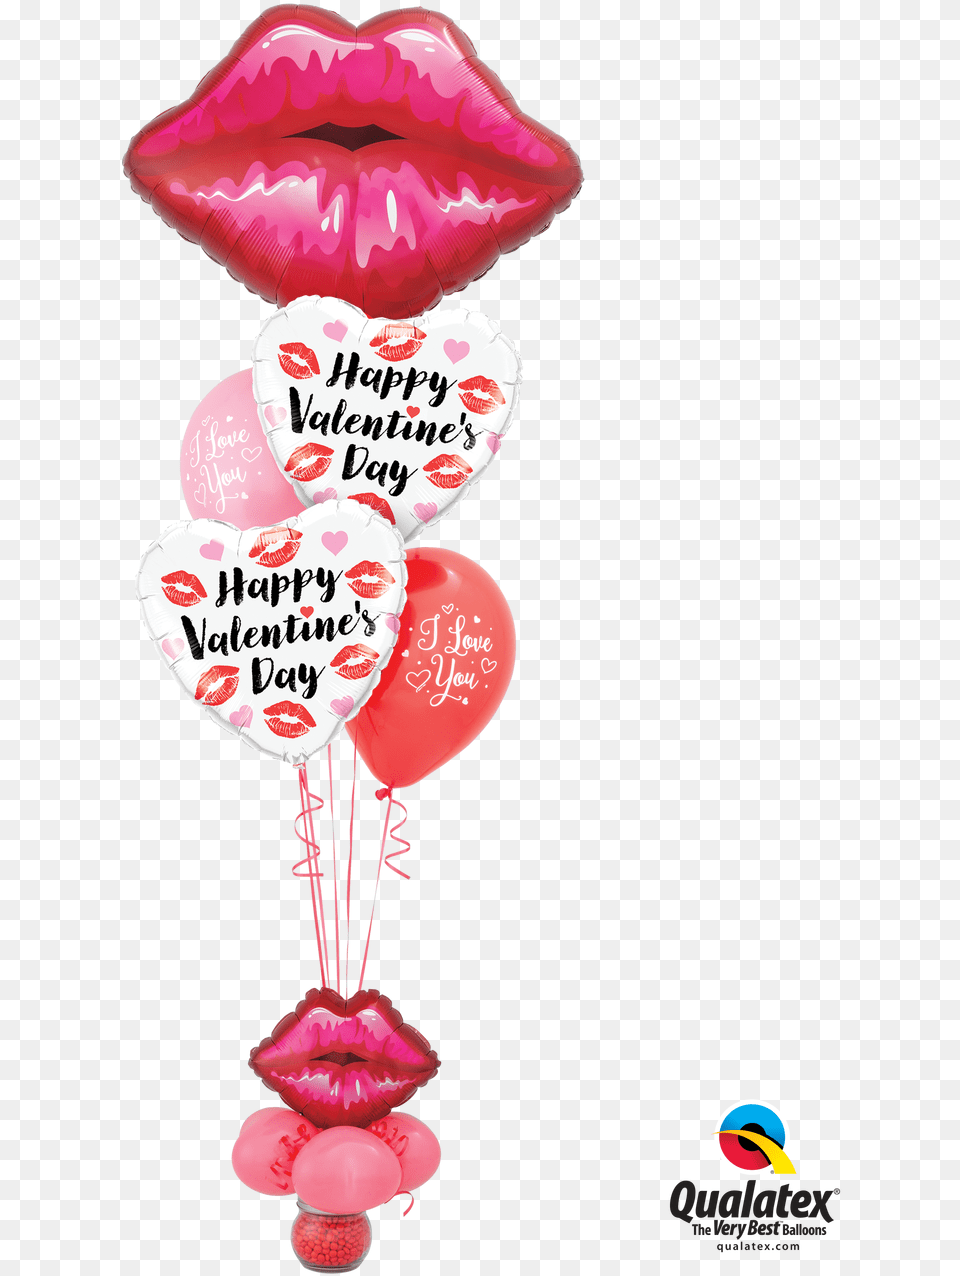 Smoochies Big Balloon Bouquet Qualatex Valentine Balloon Free Transparent Png